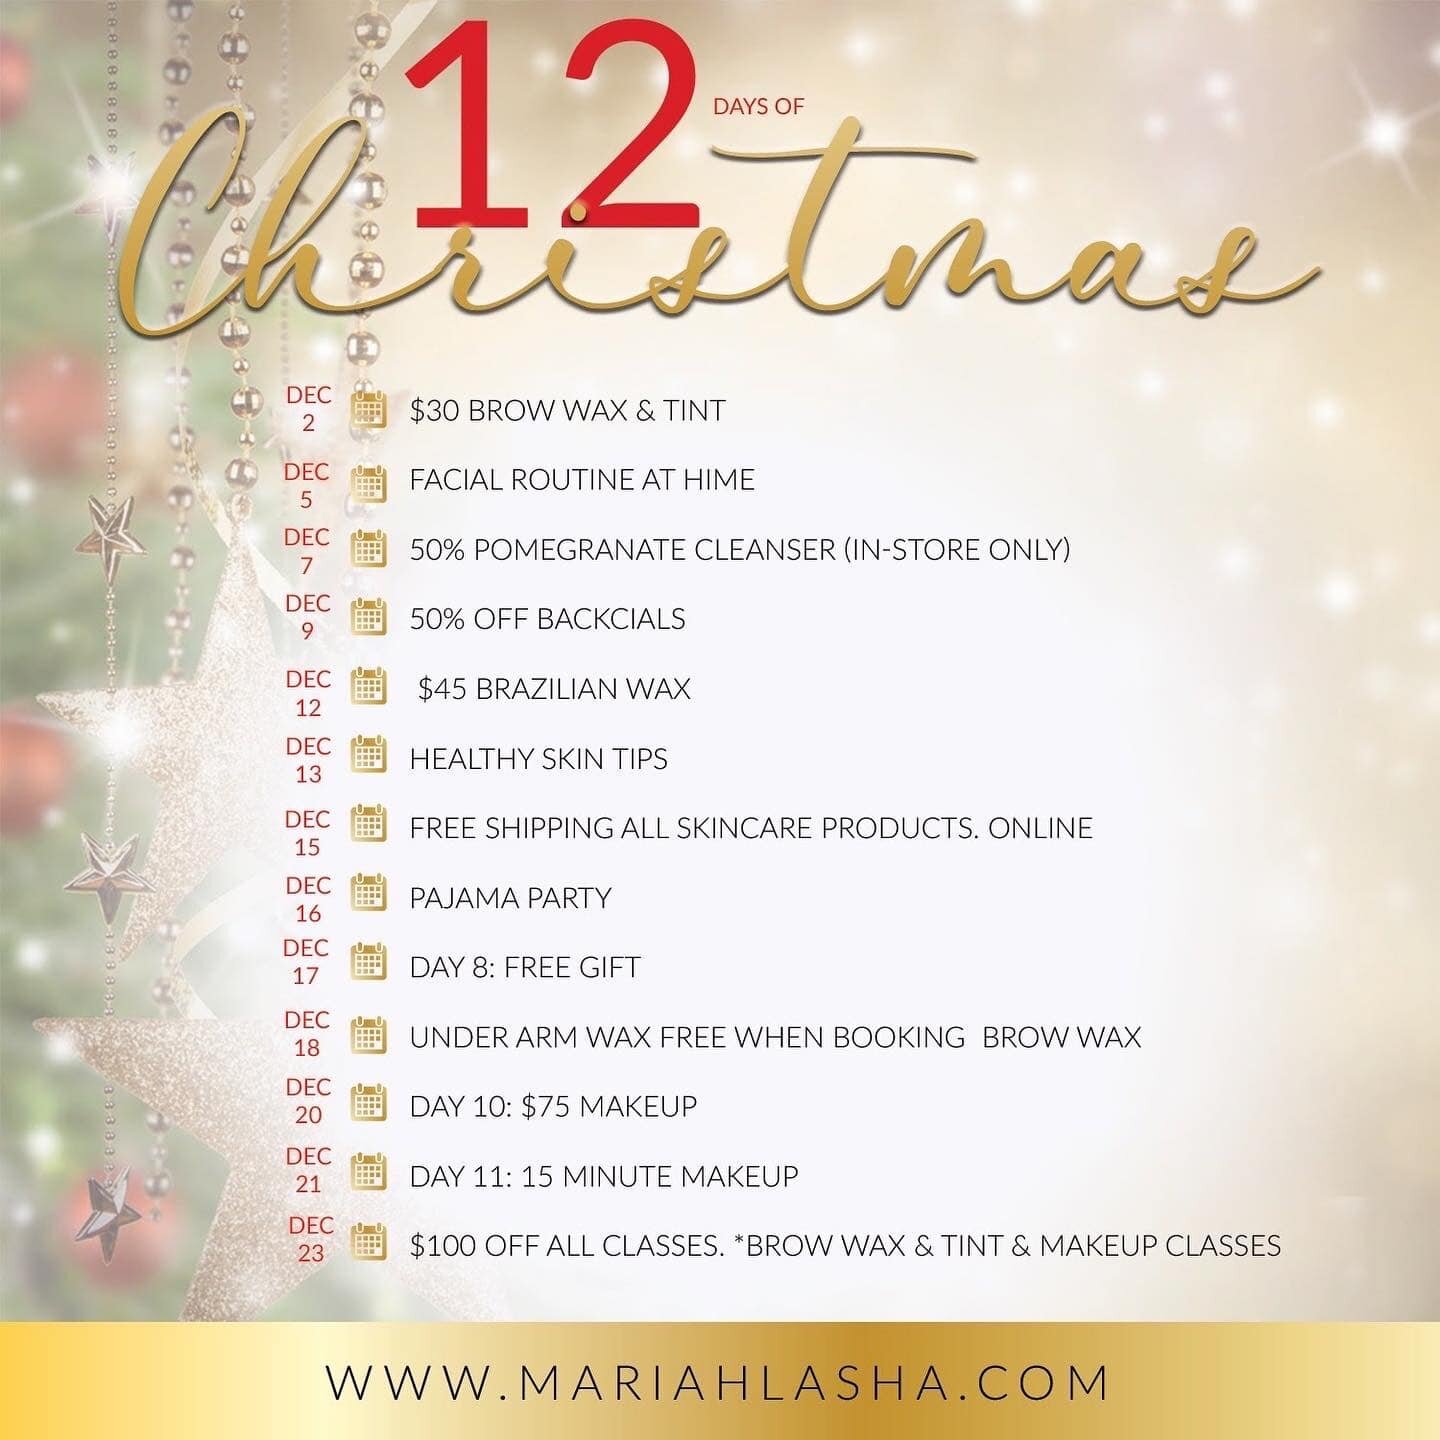 Mariah LaSha Skin Studio 12 Days Of Christmas Starts At Midnight!! 🎄

MariahLasha.com